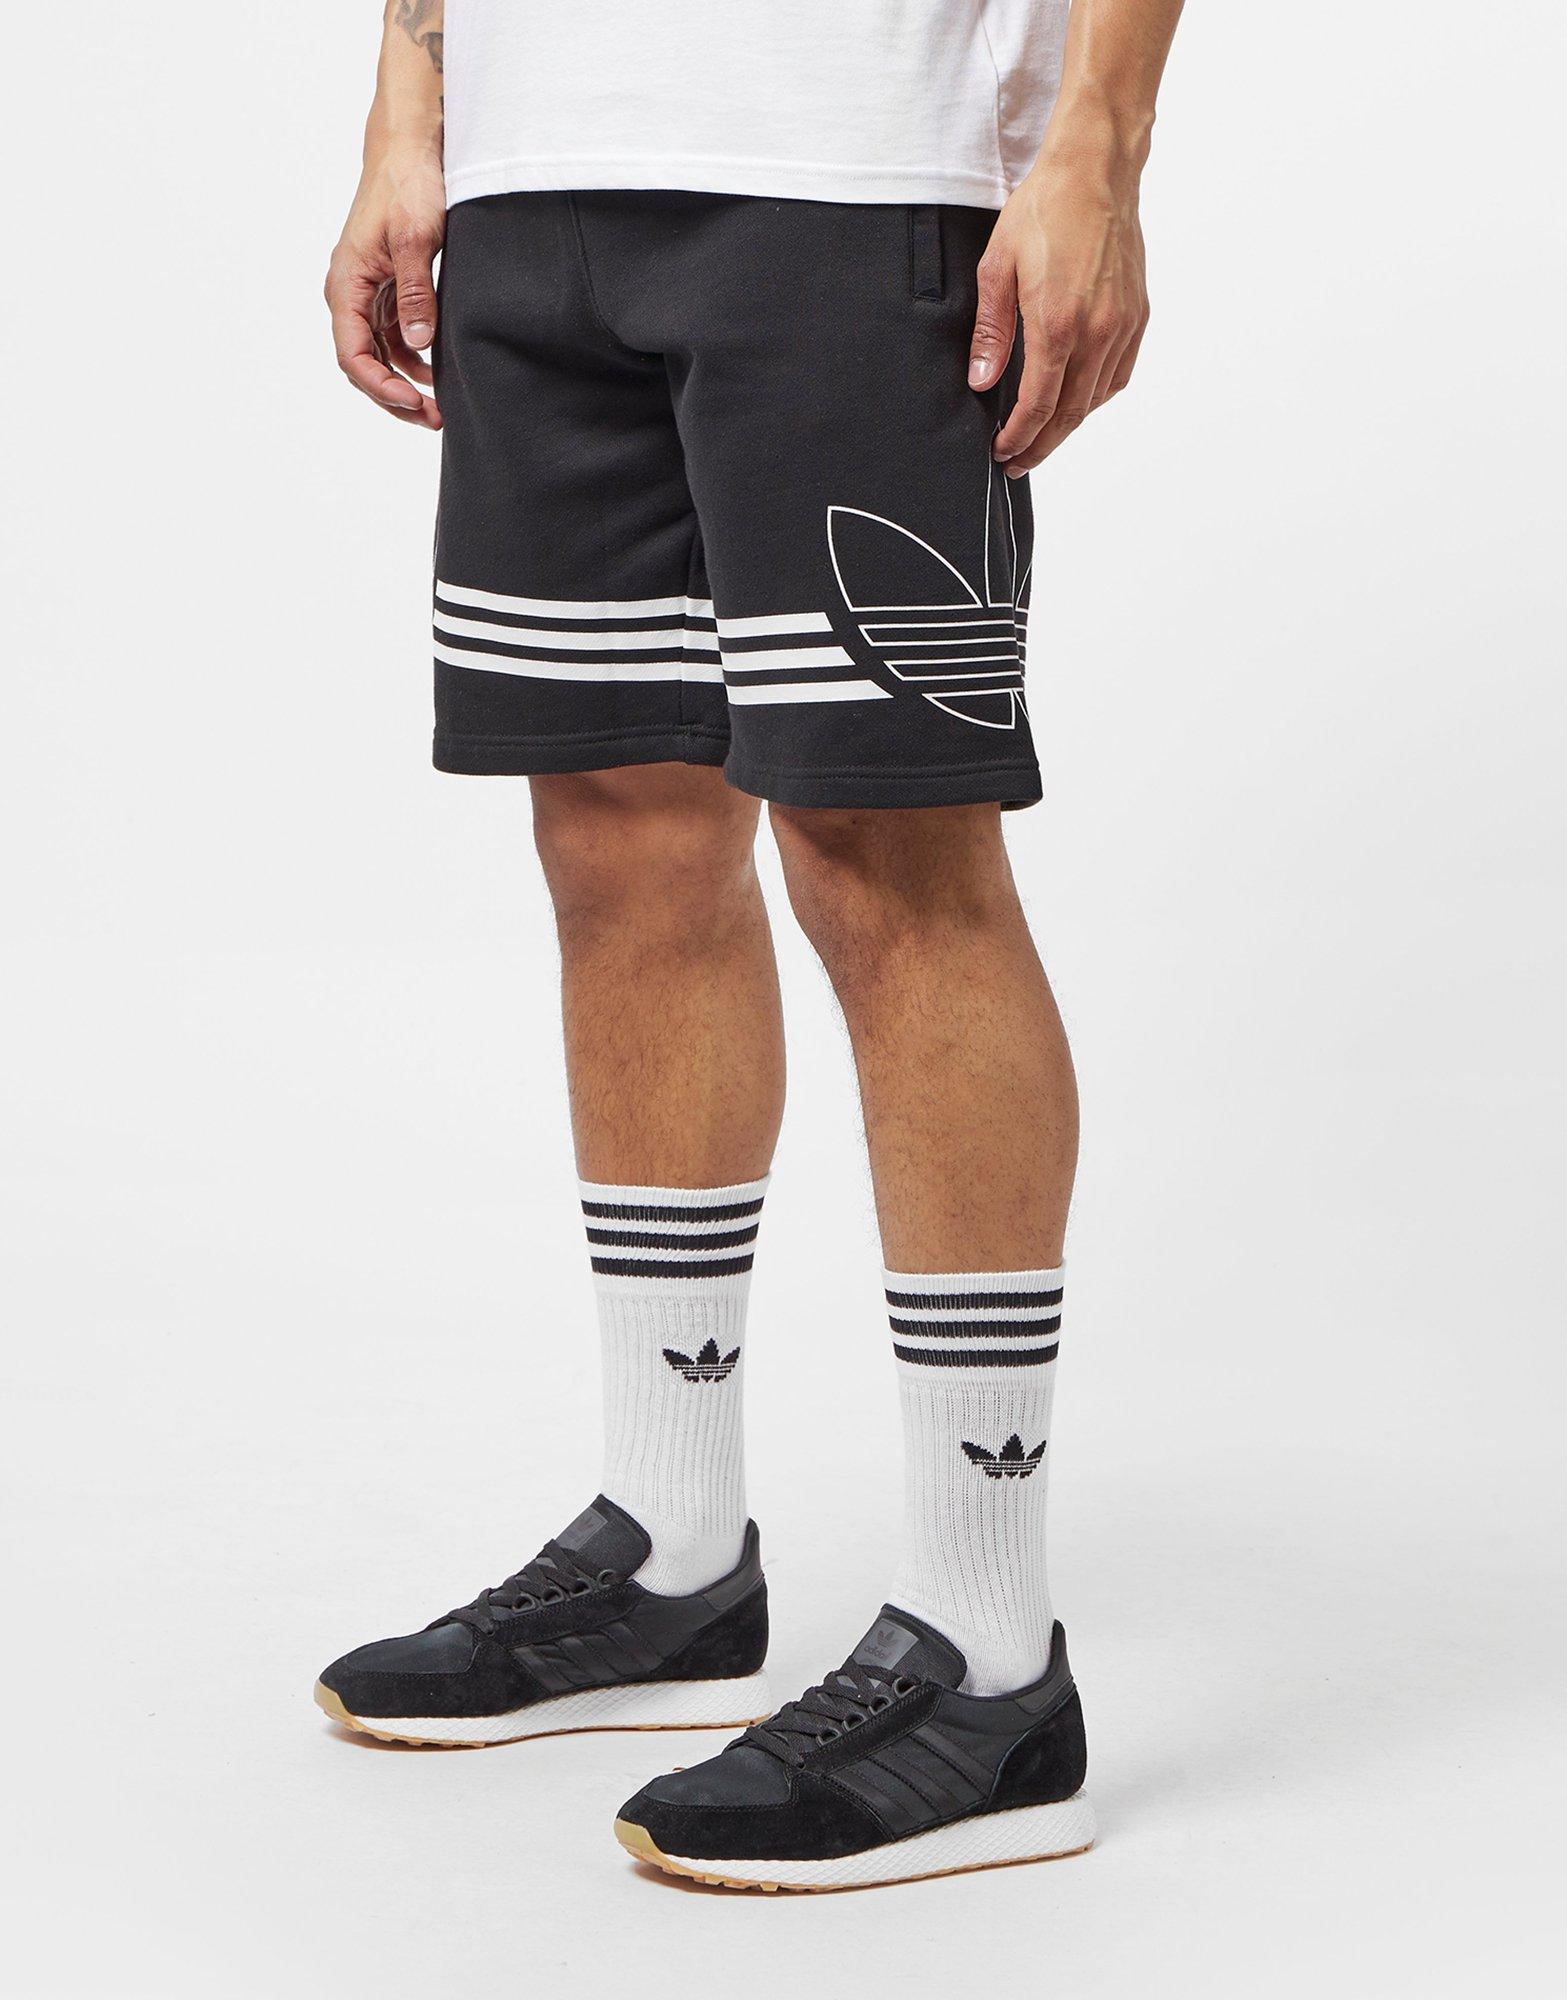 adidas radkin shorts